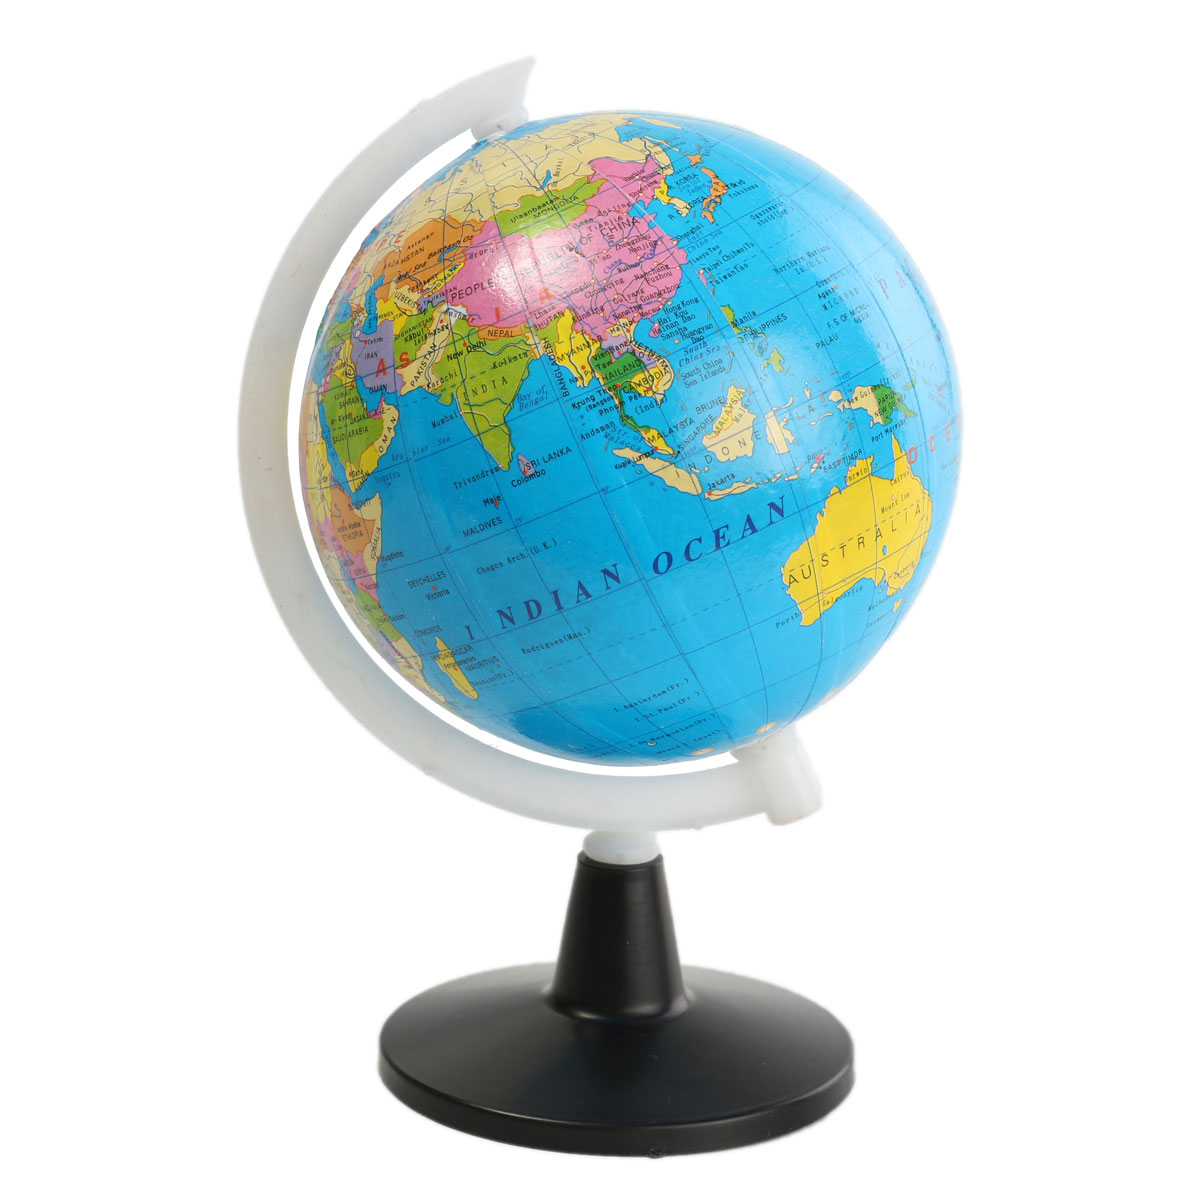 22cm Vintage Style Rotating Globe Swivel Map Earth Geography Atlas World Gift 